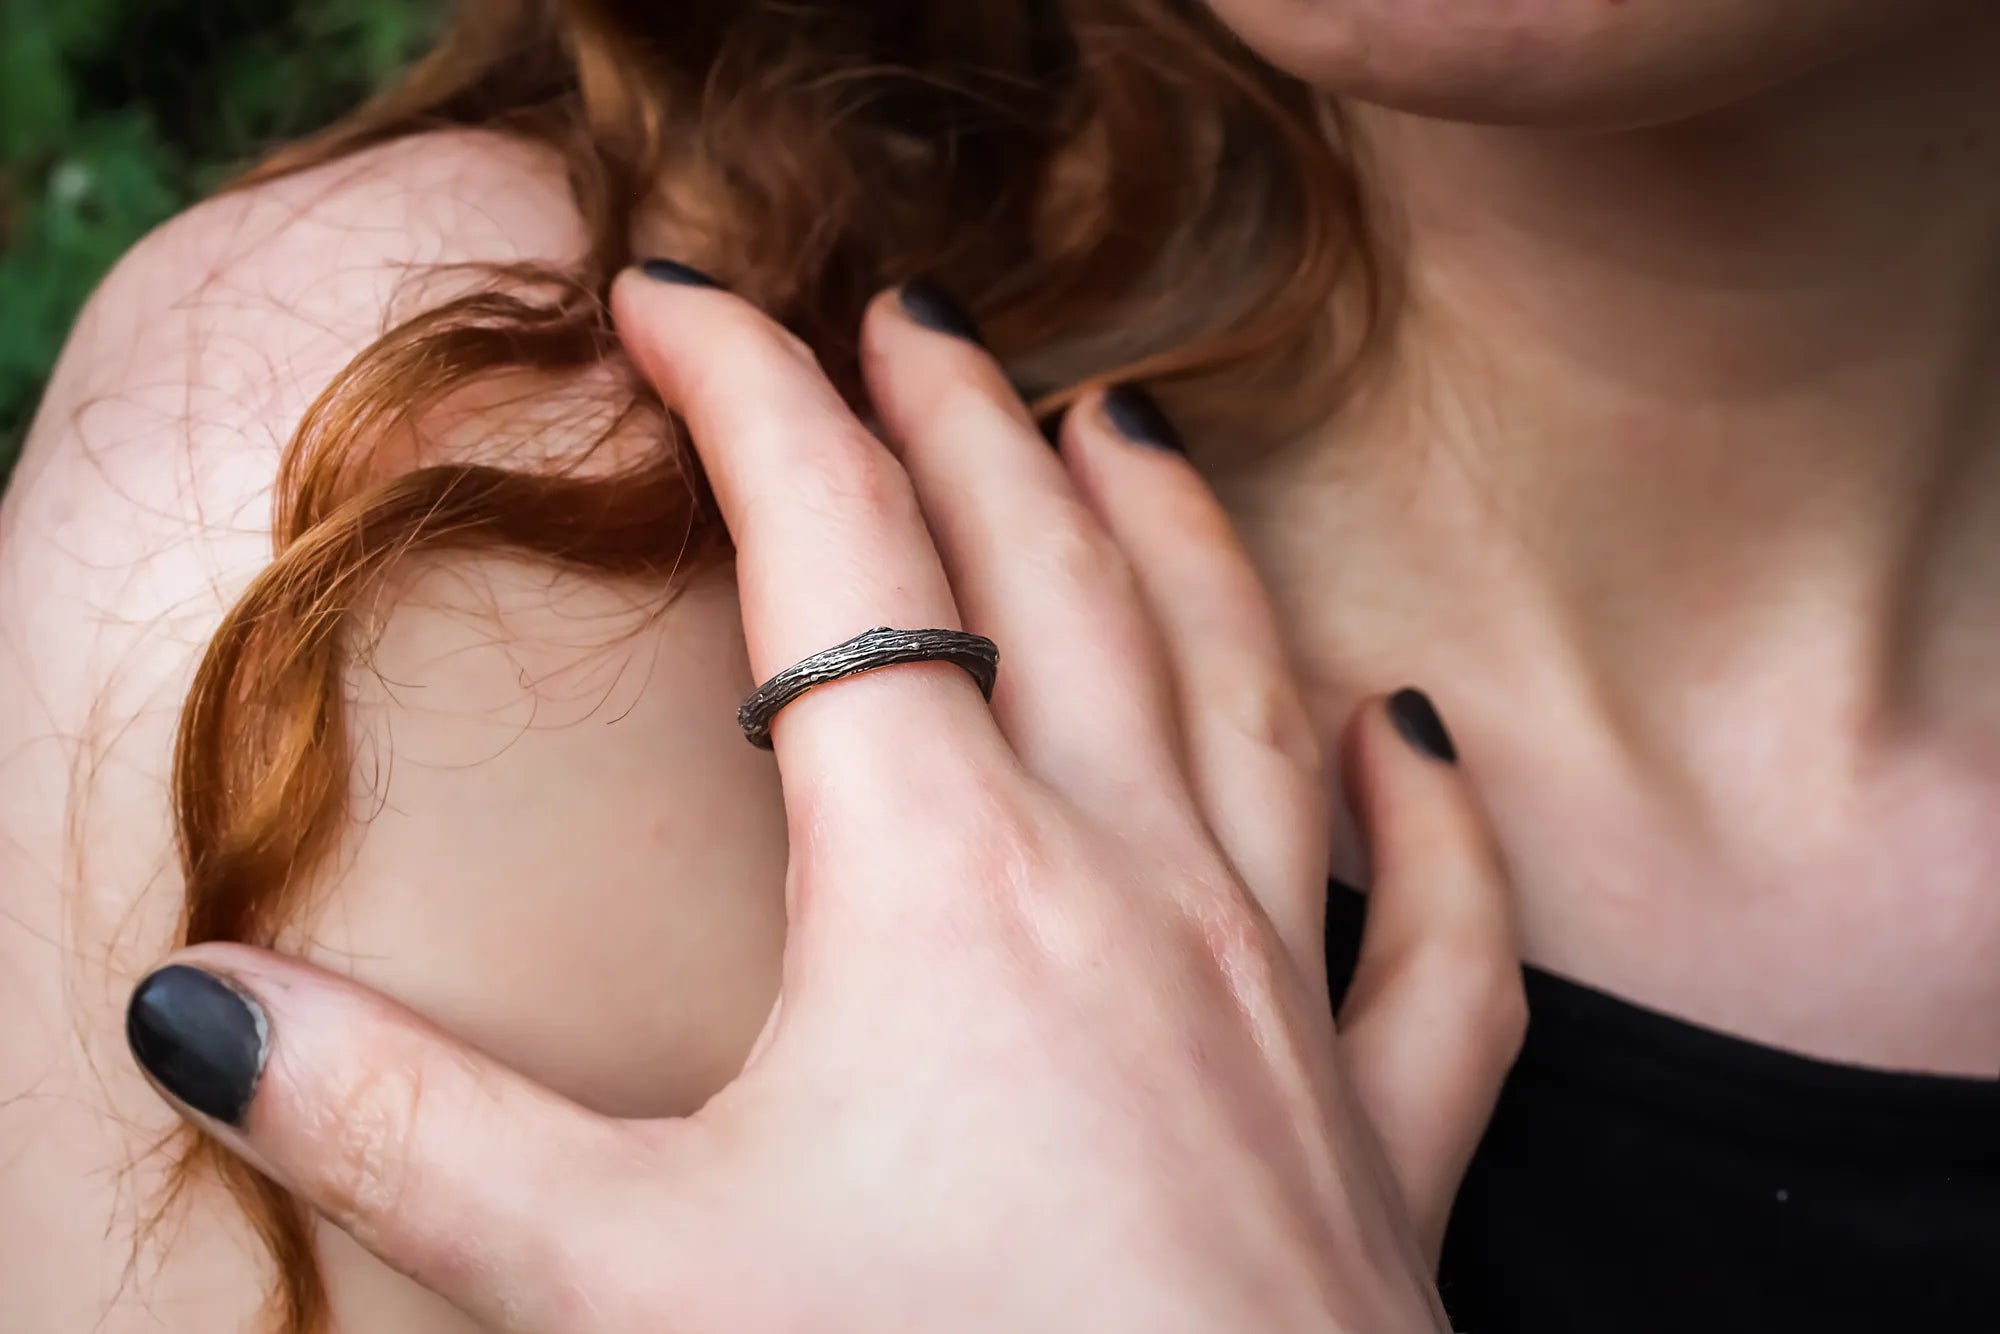 sterkling silver branch ring worn on womans finger